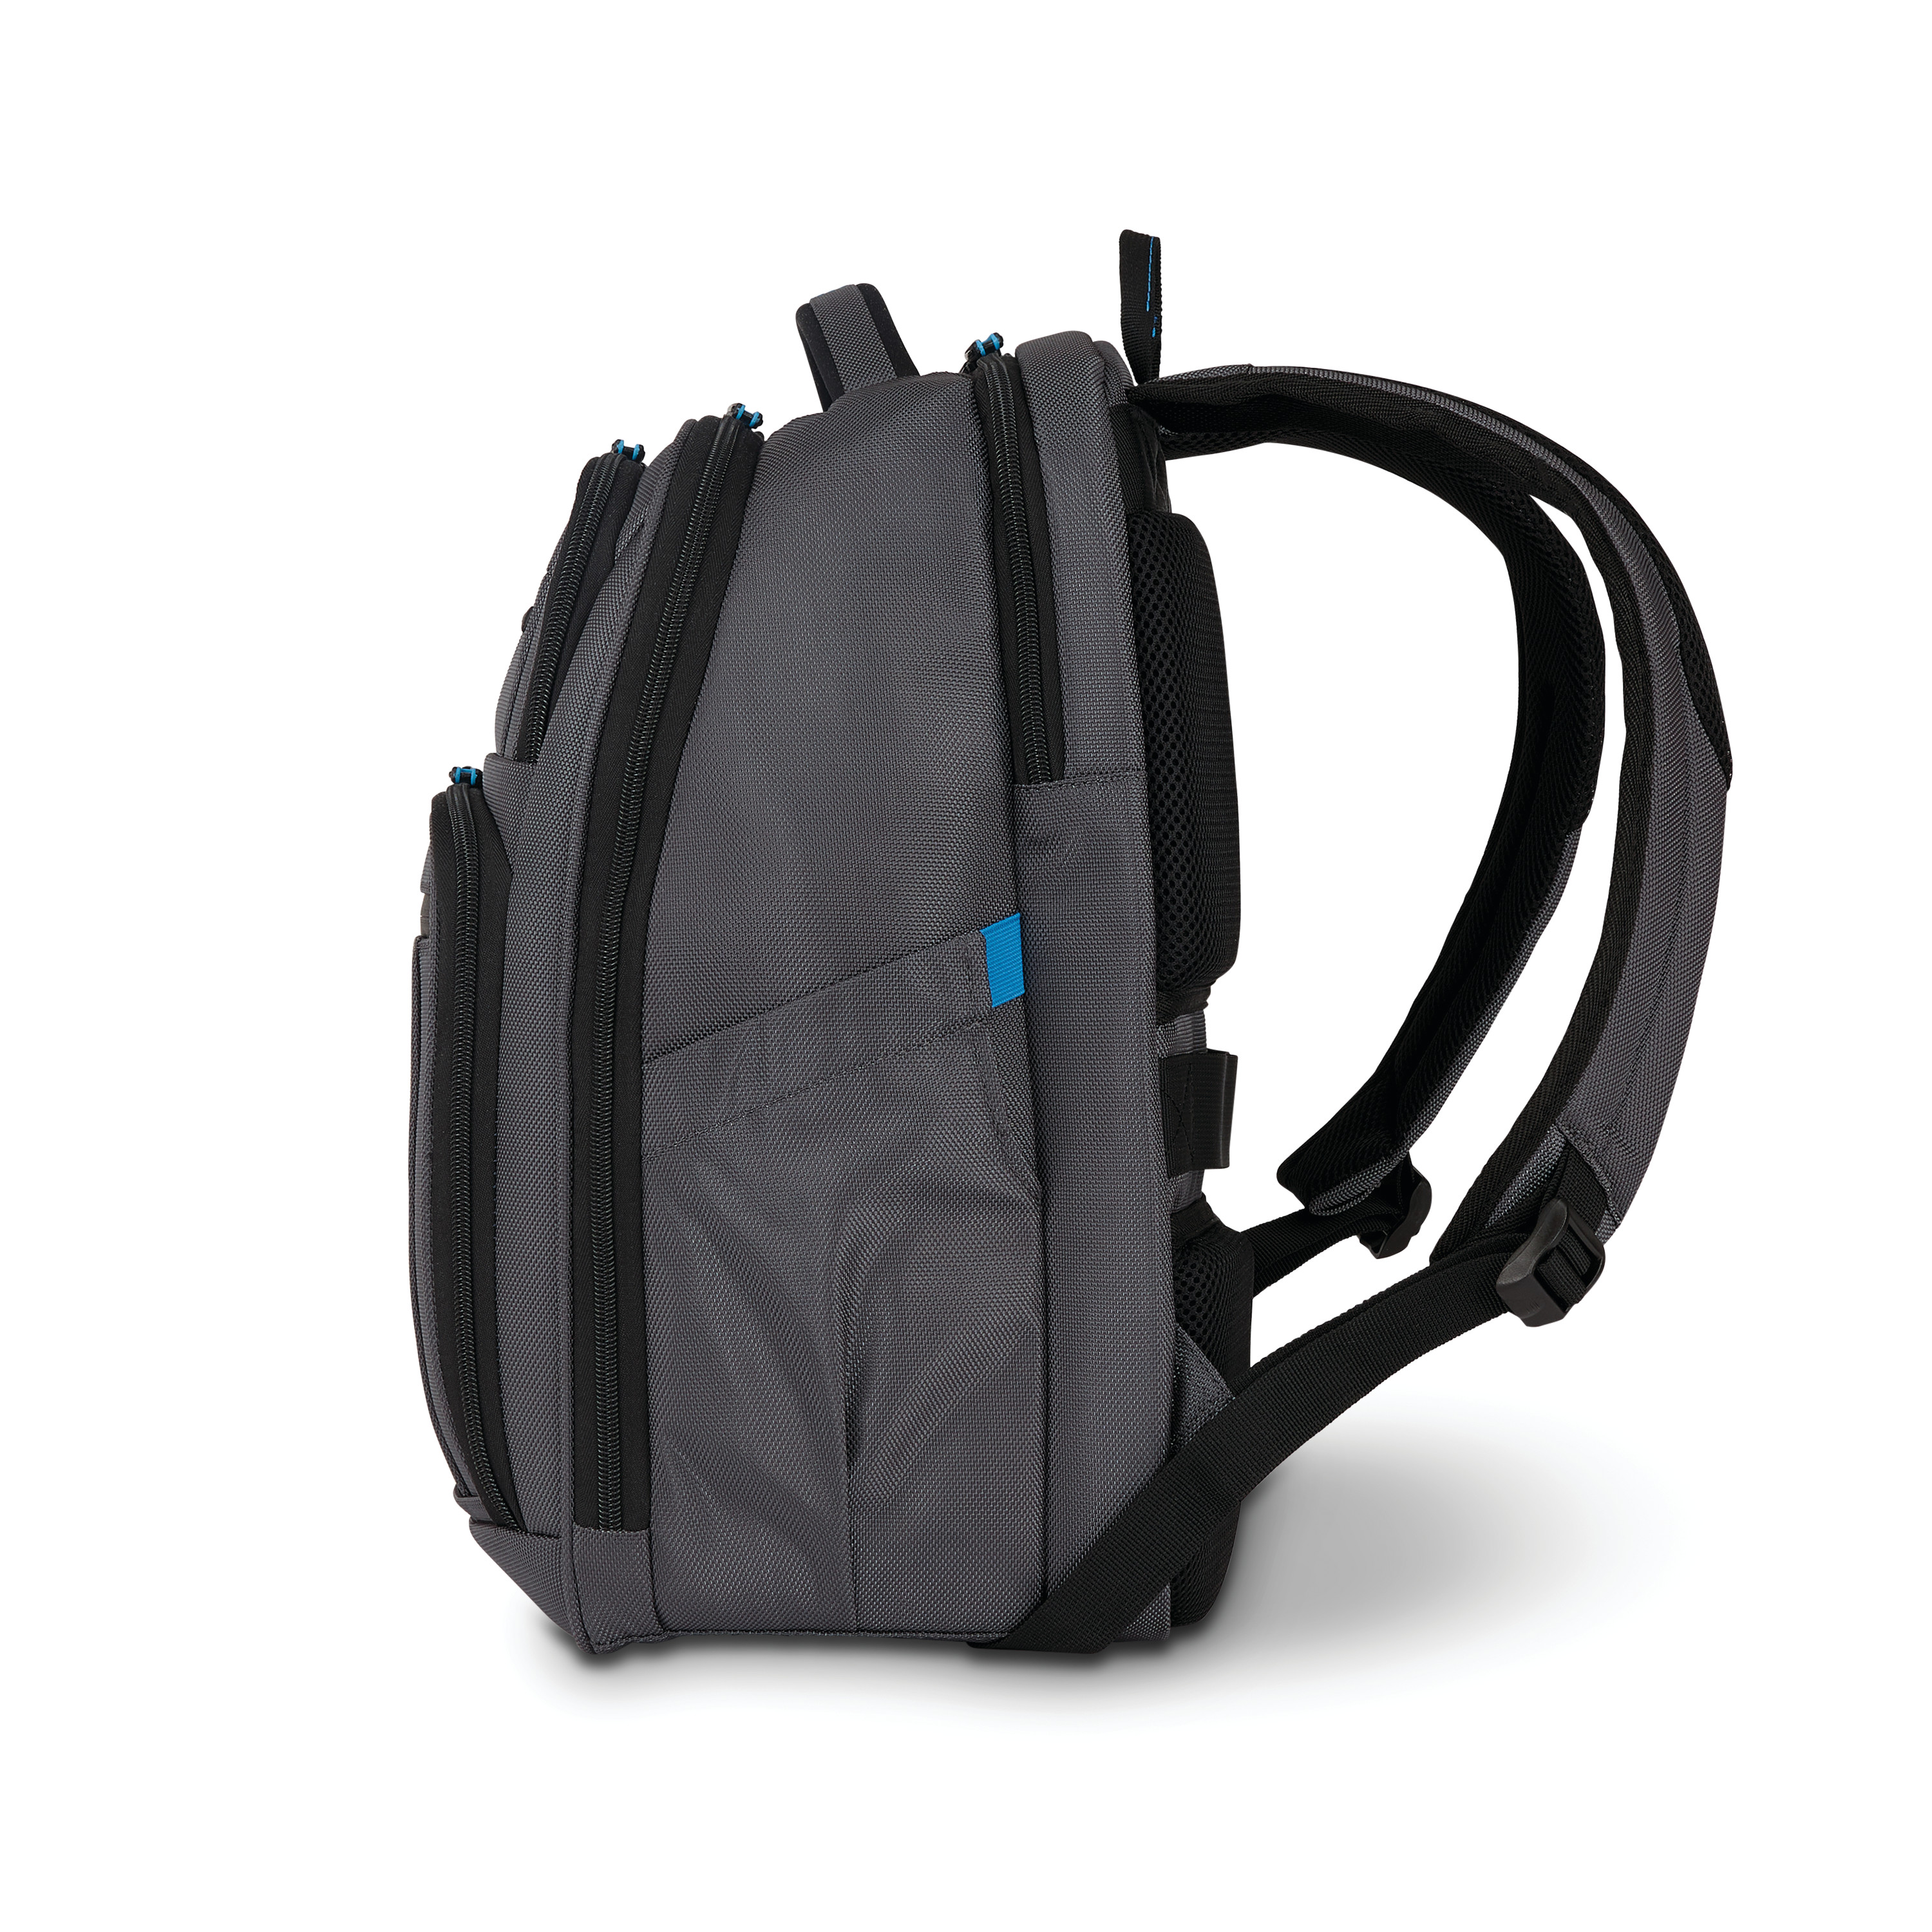 Buy Novex Laptop Samsonite | Backpack US 74.99 for USD